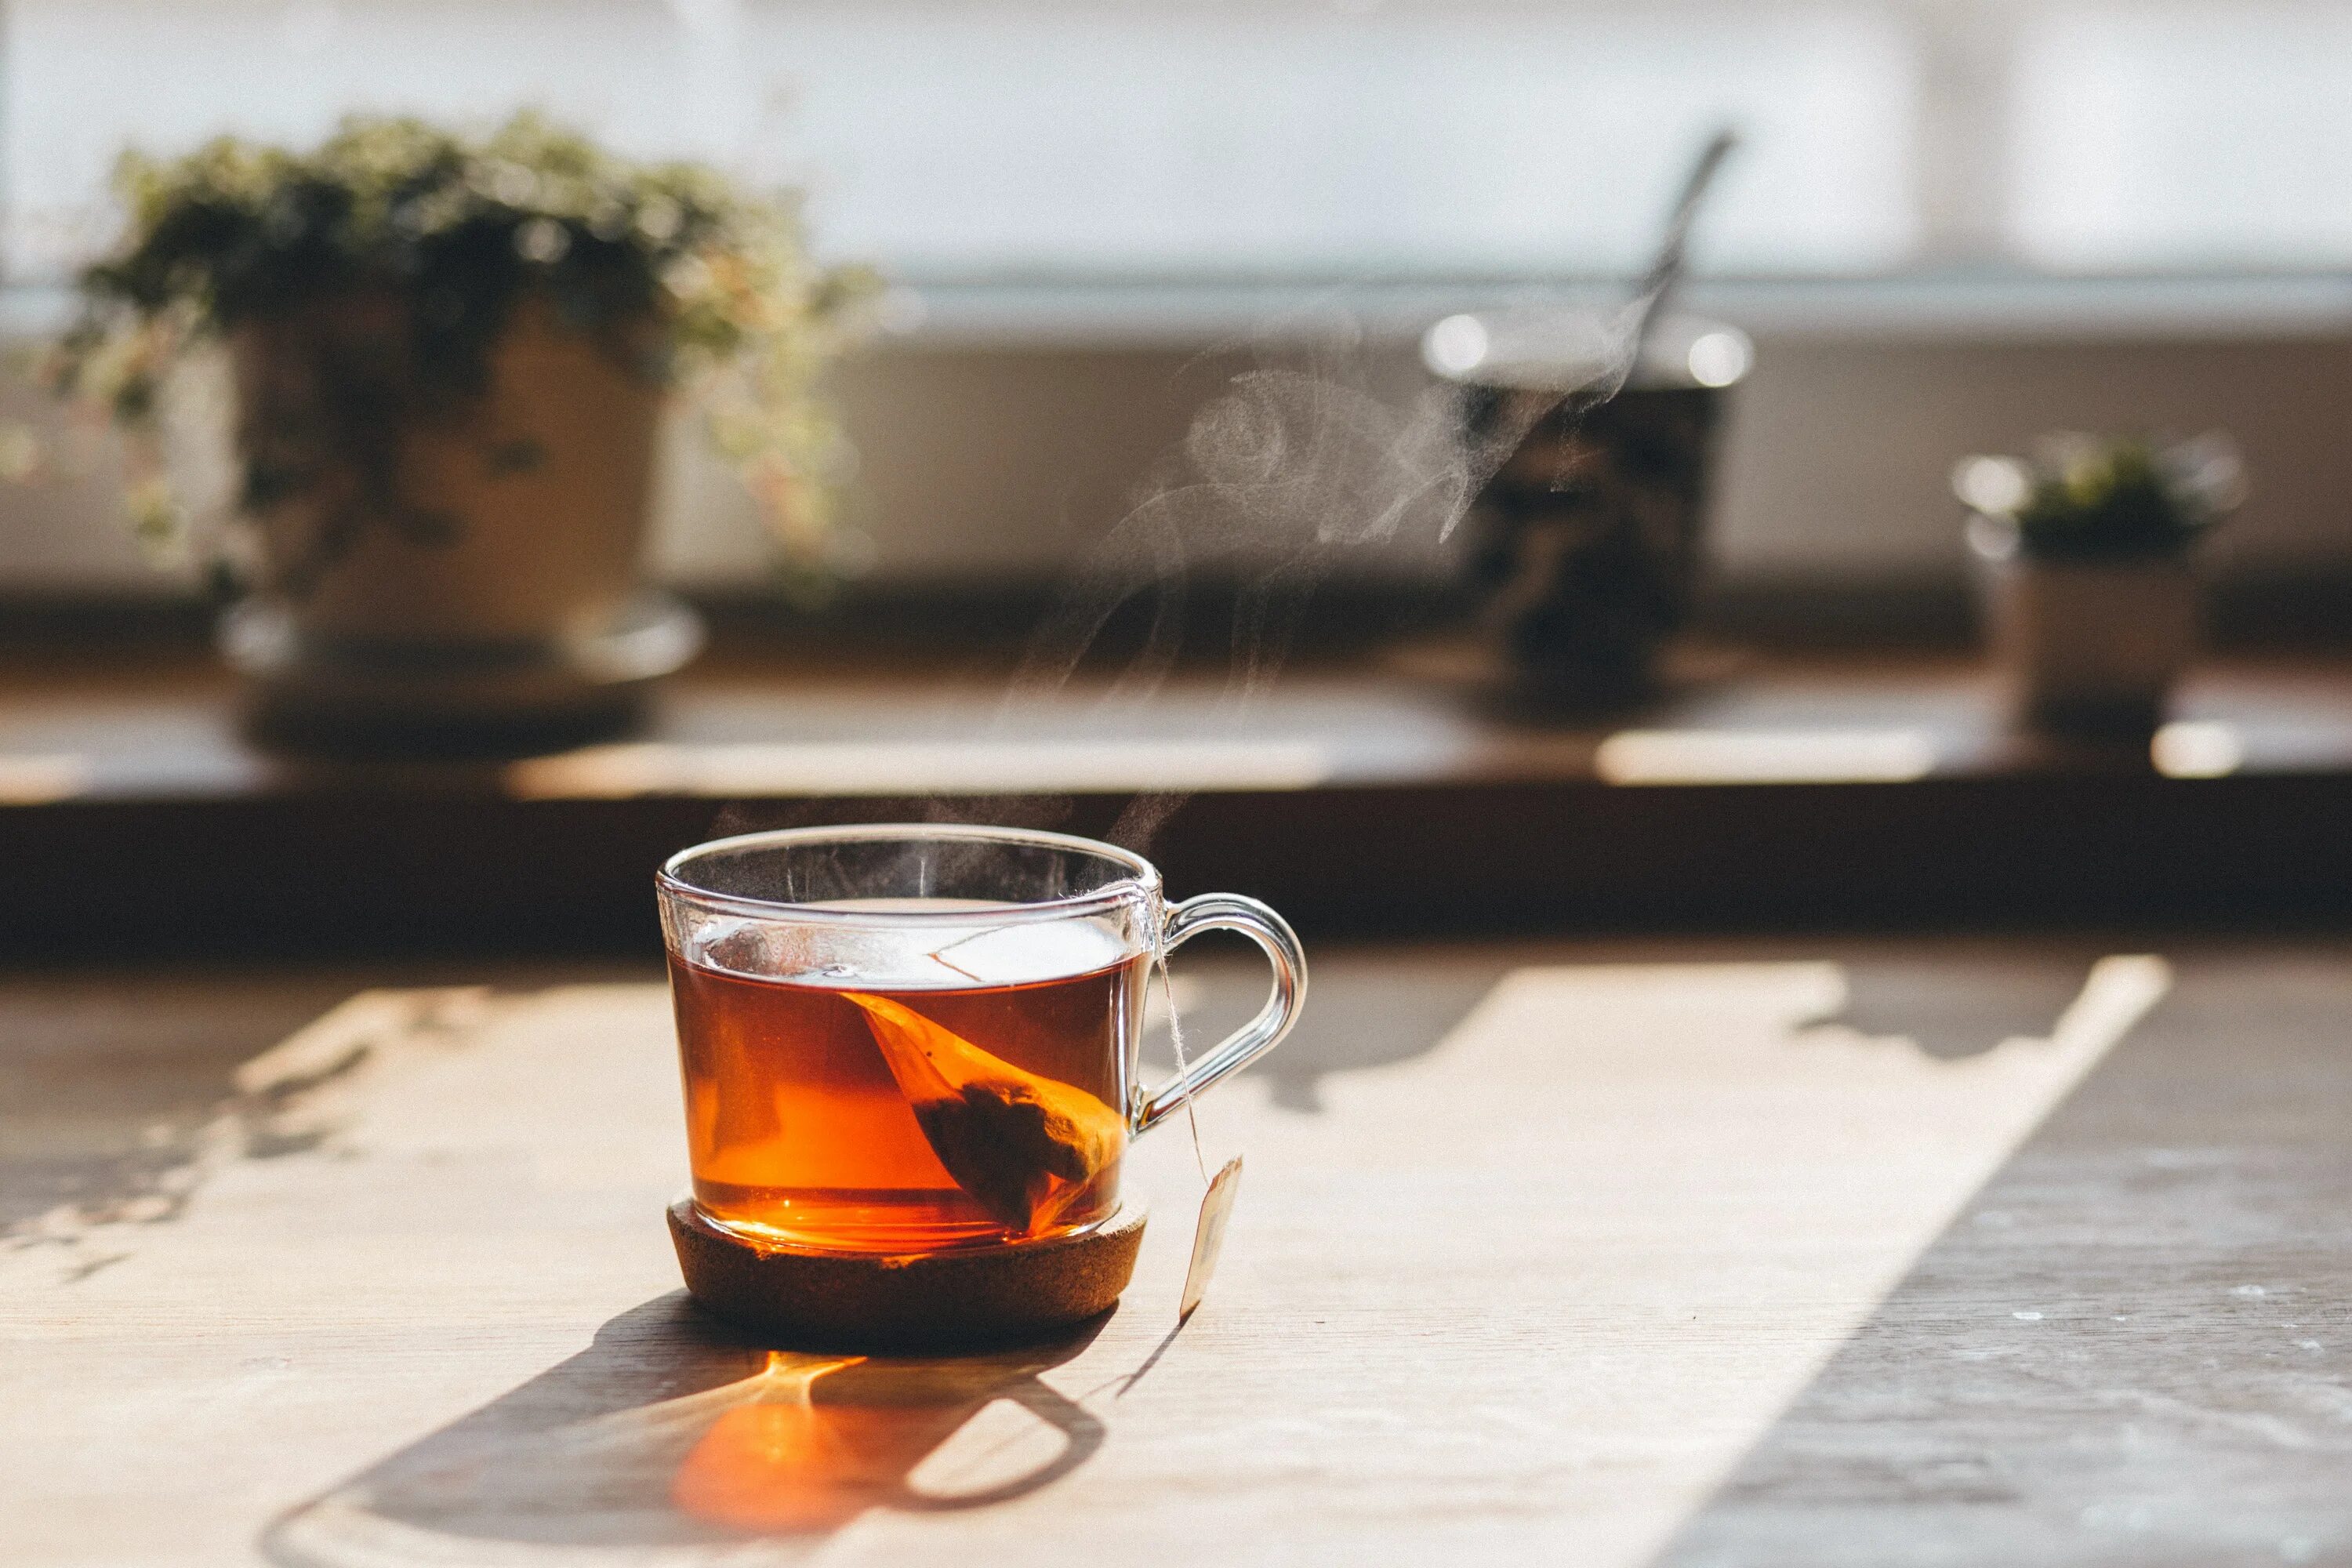 A cup of liber tea. Кружка чай. Чай на столе. Кружка чая на столе. Горячий чай.